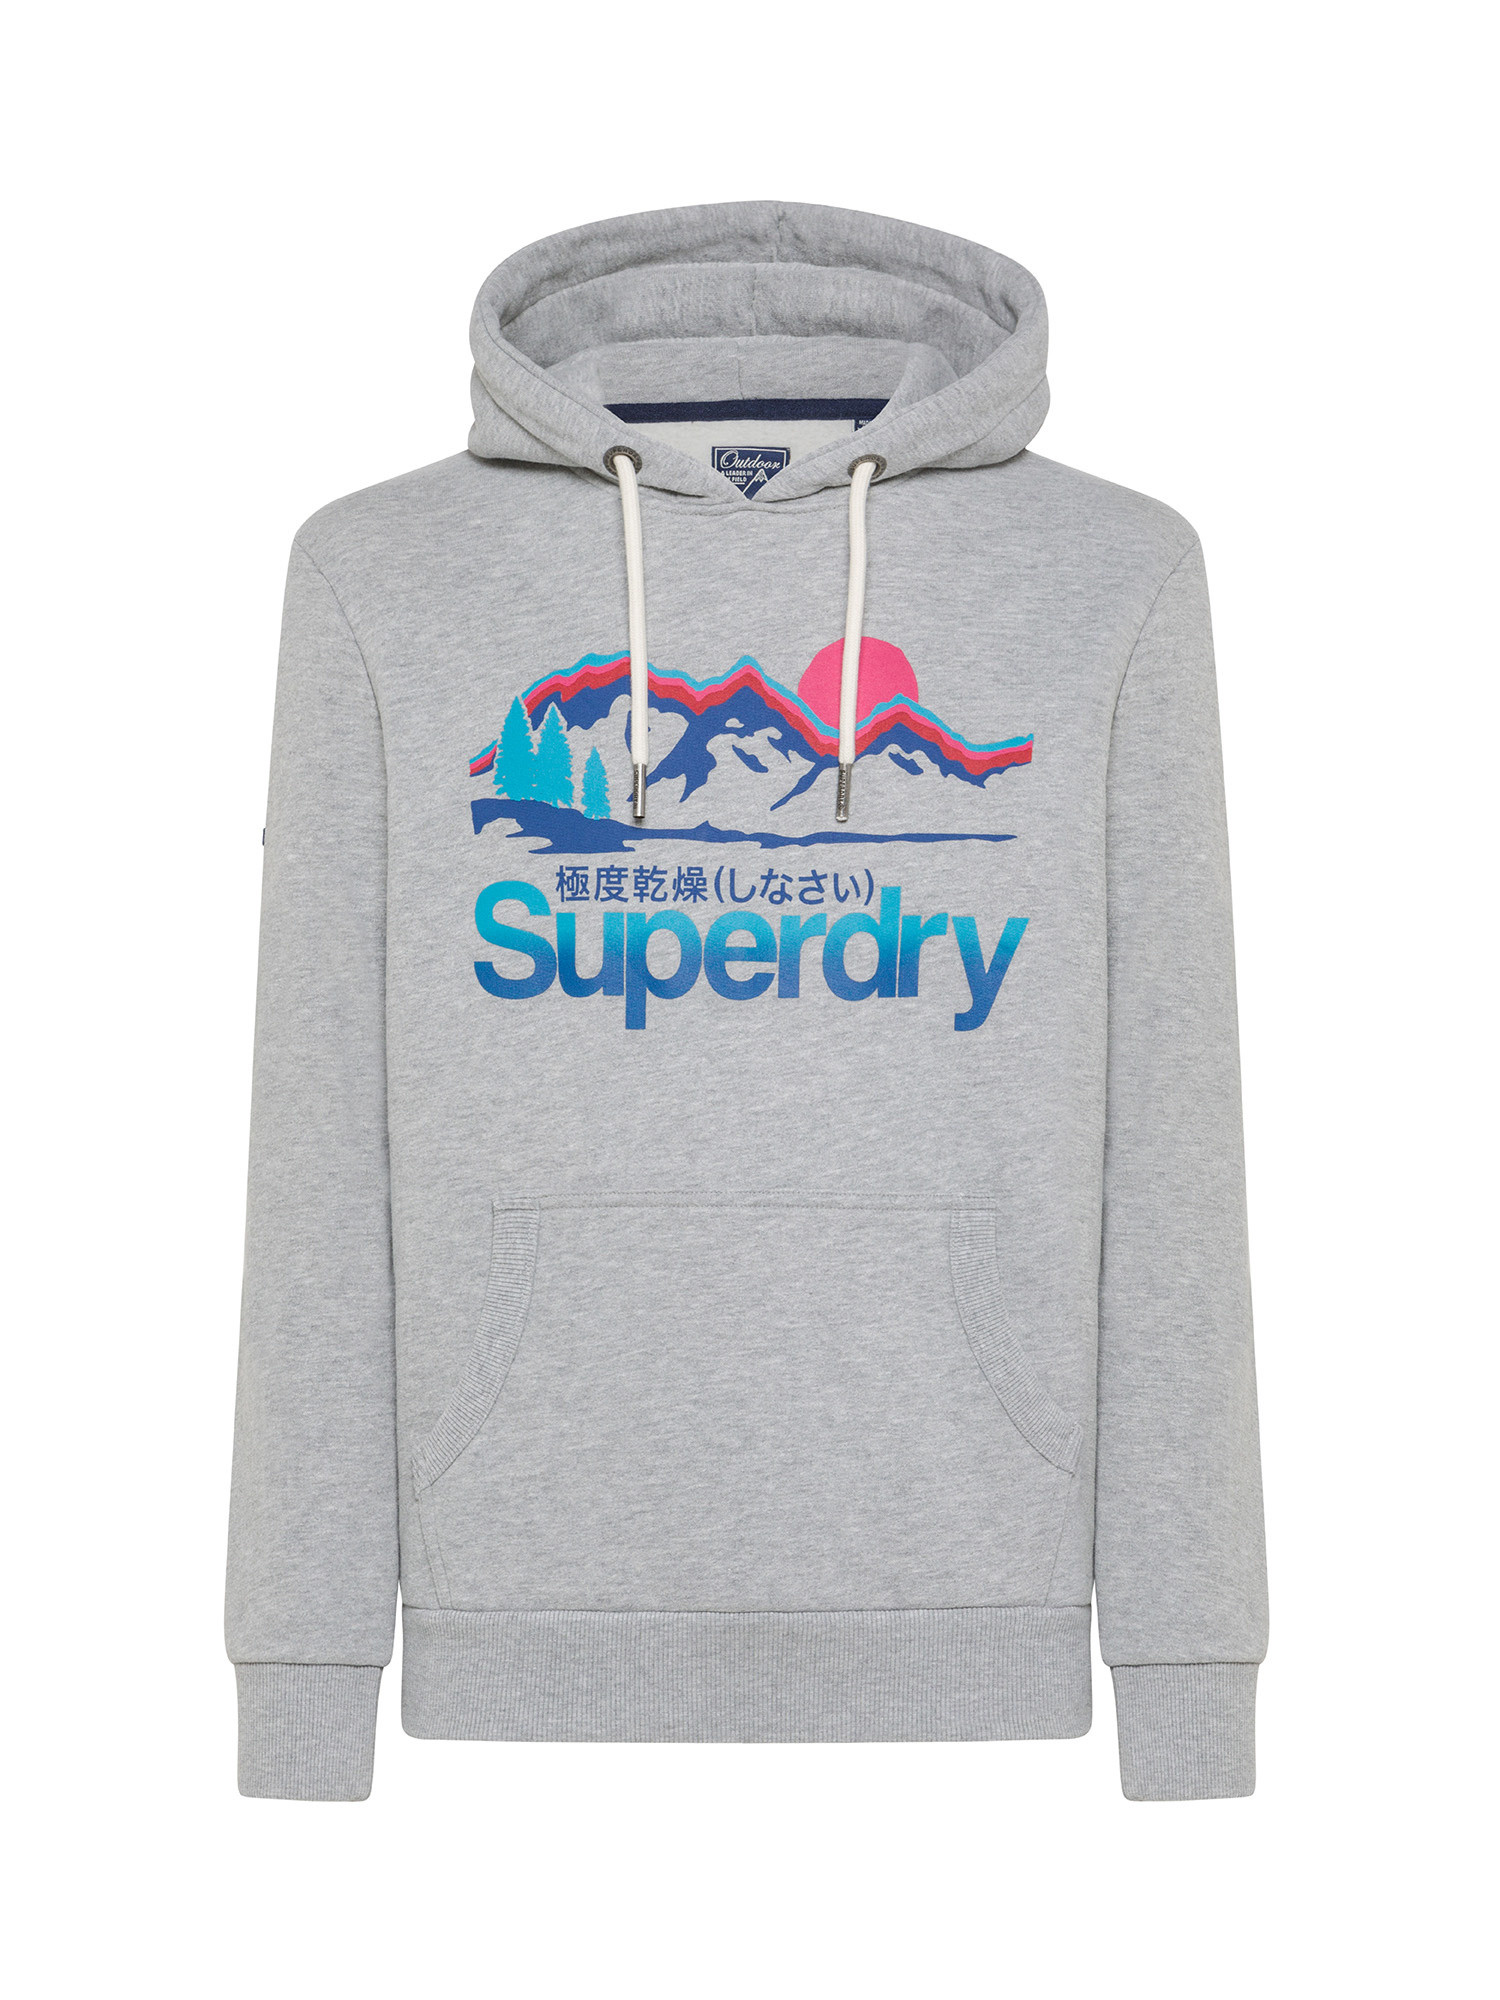 Superdry - Hooded sweatshirt with logo, Grey, large image number 0